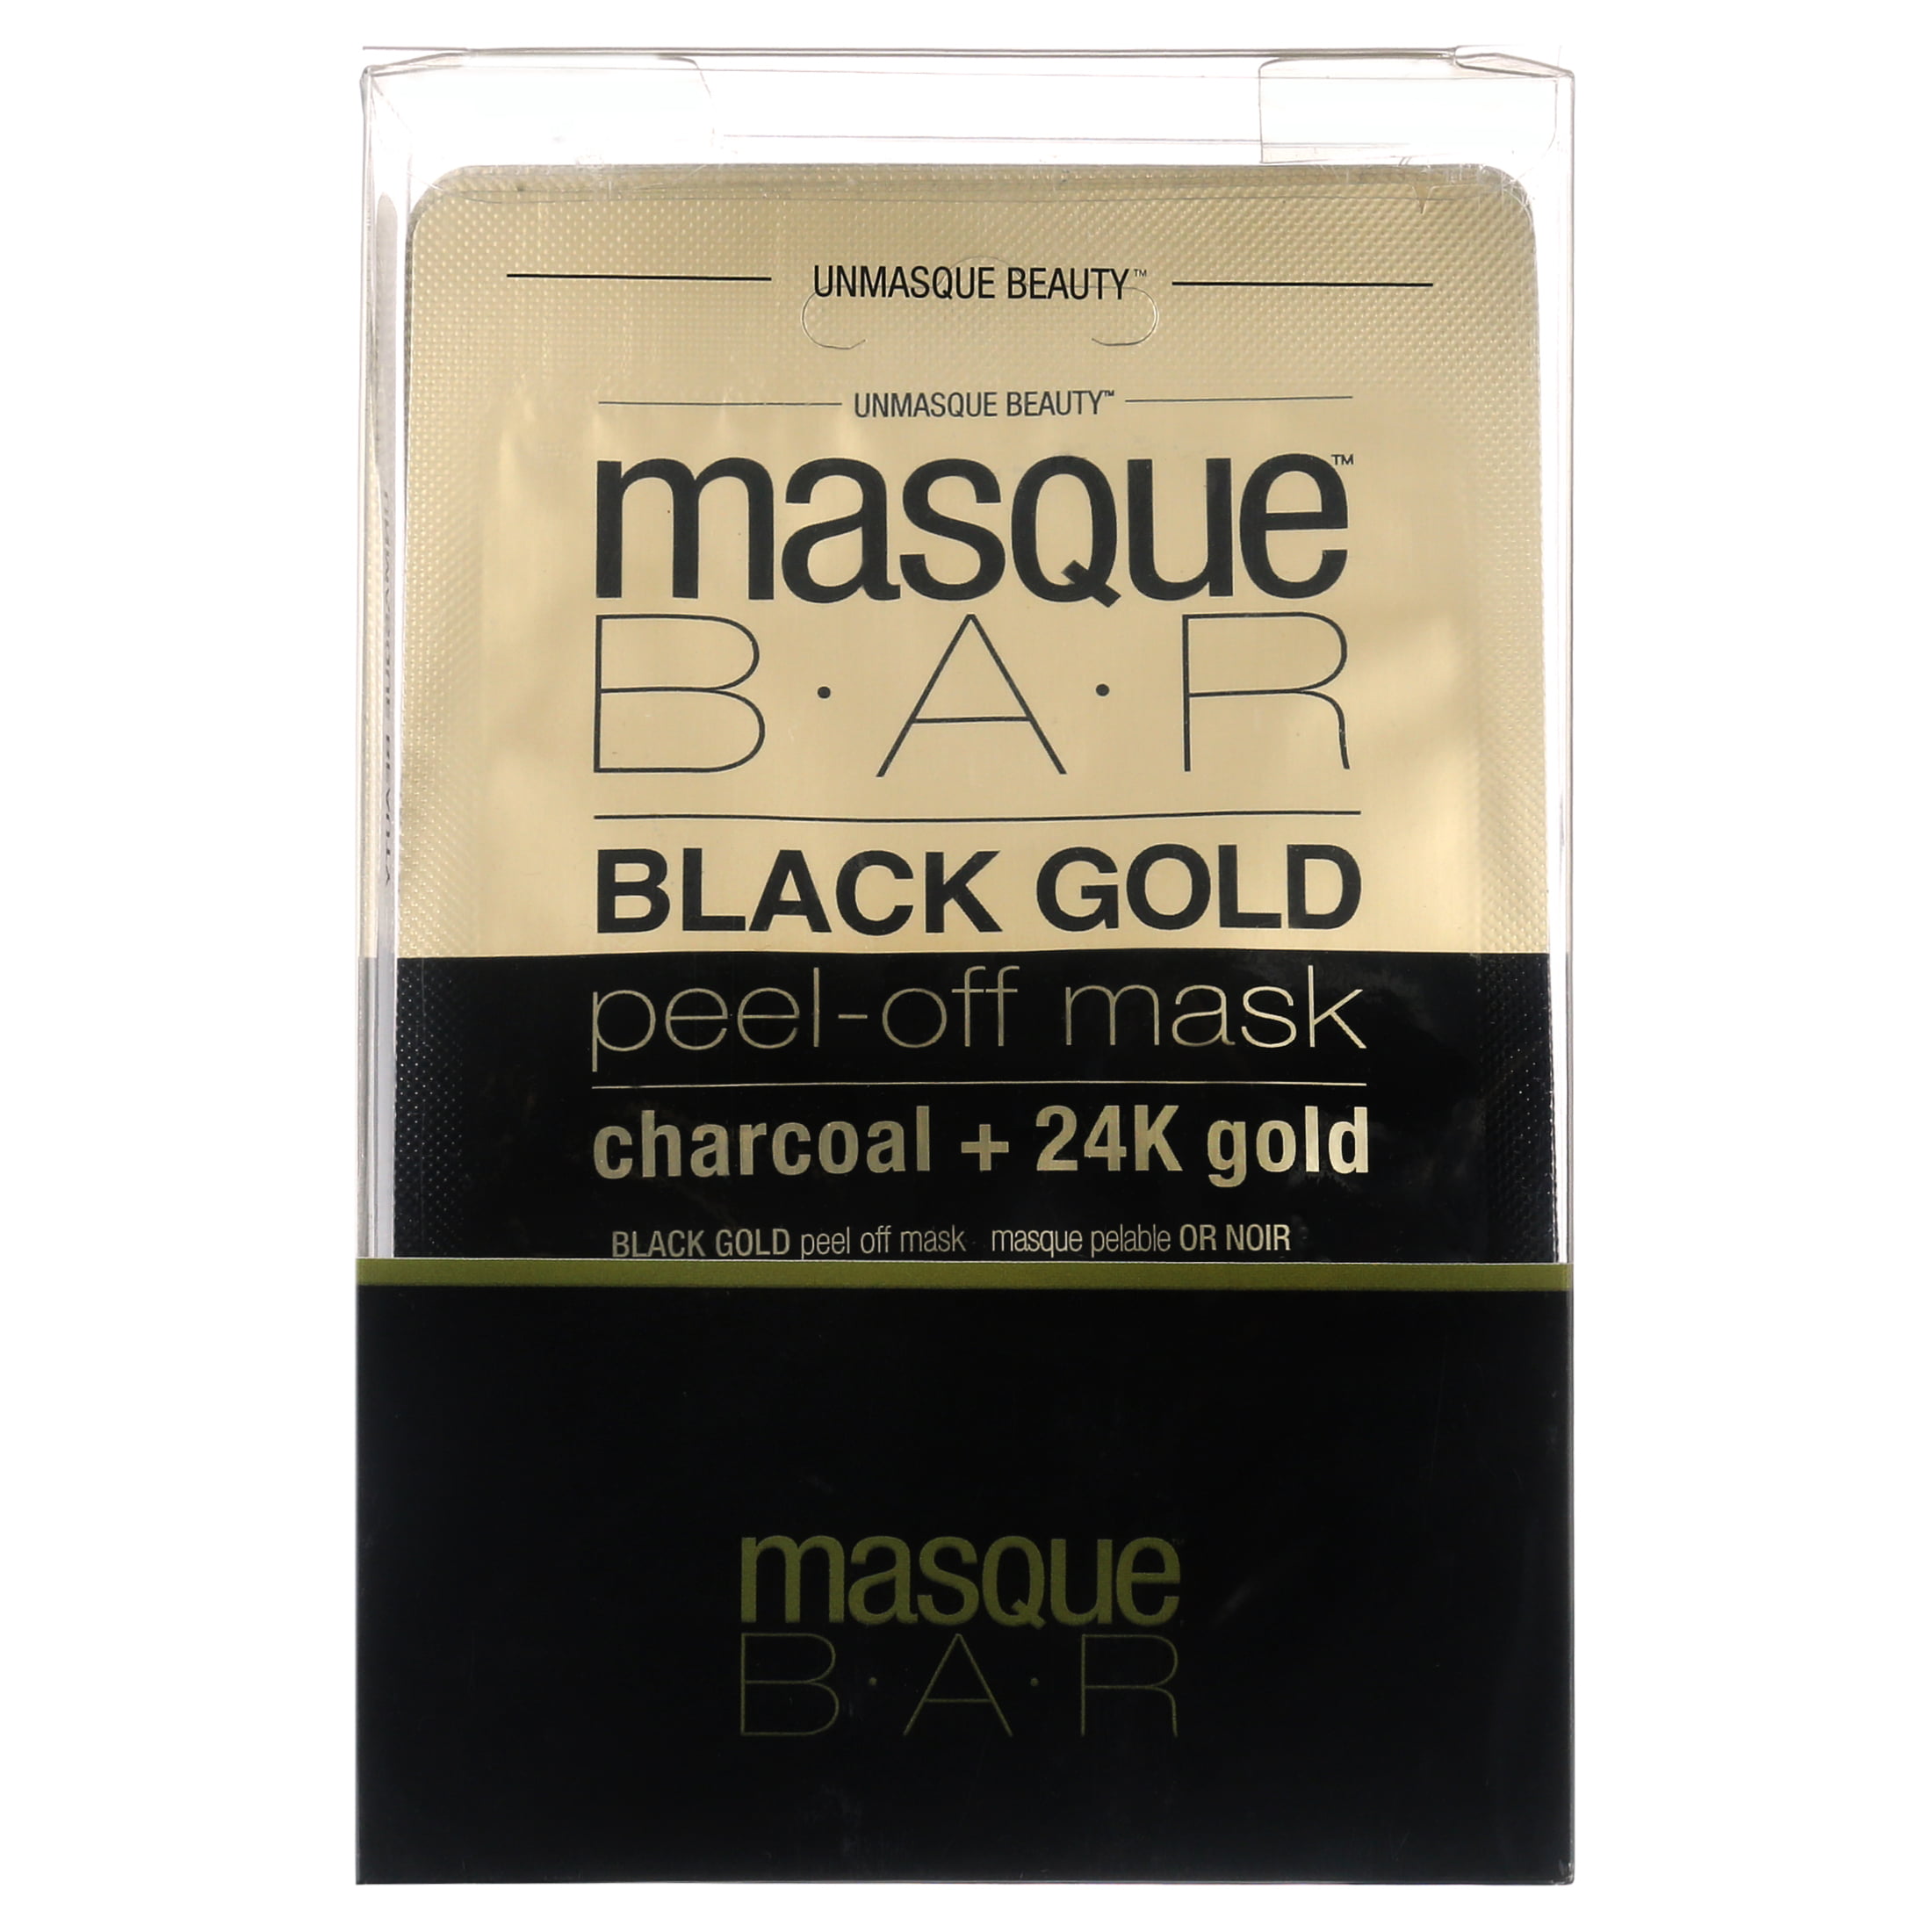 Masque Bar Black Gold Peel-Off Mask,  fl oz 